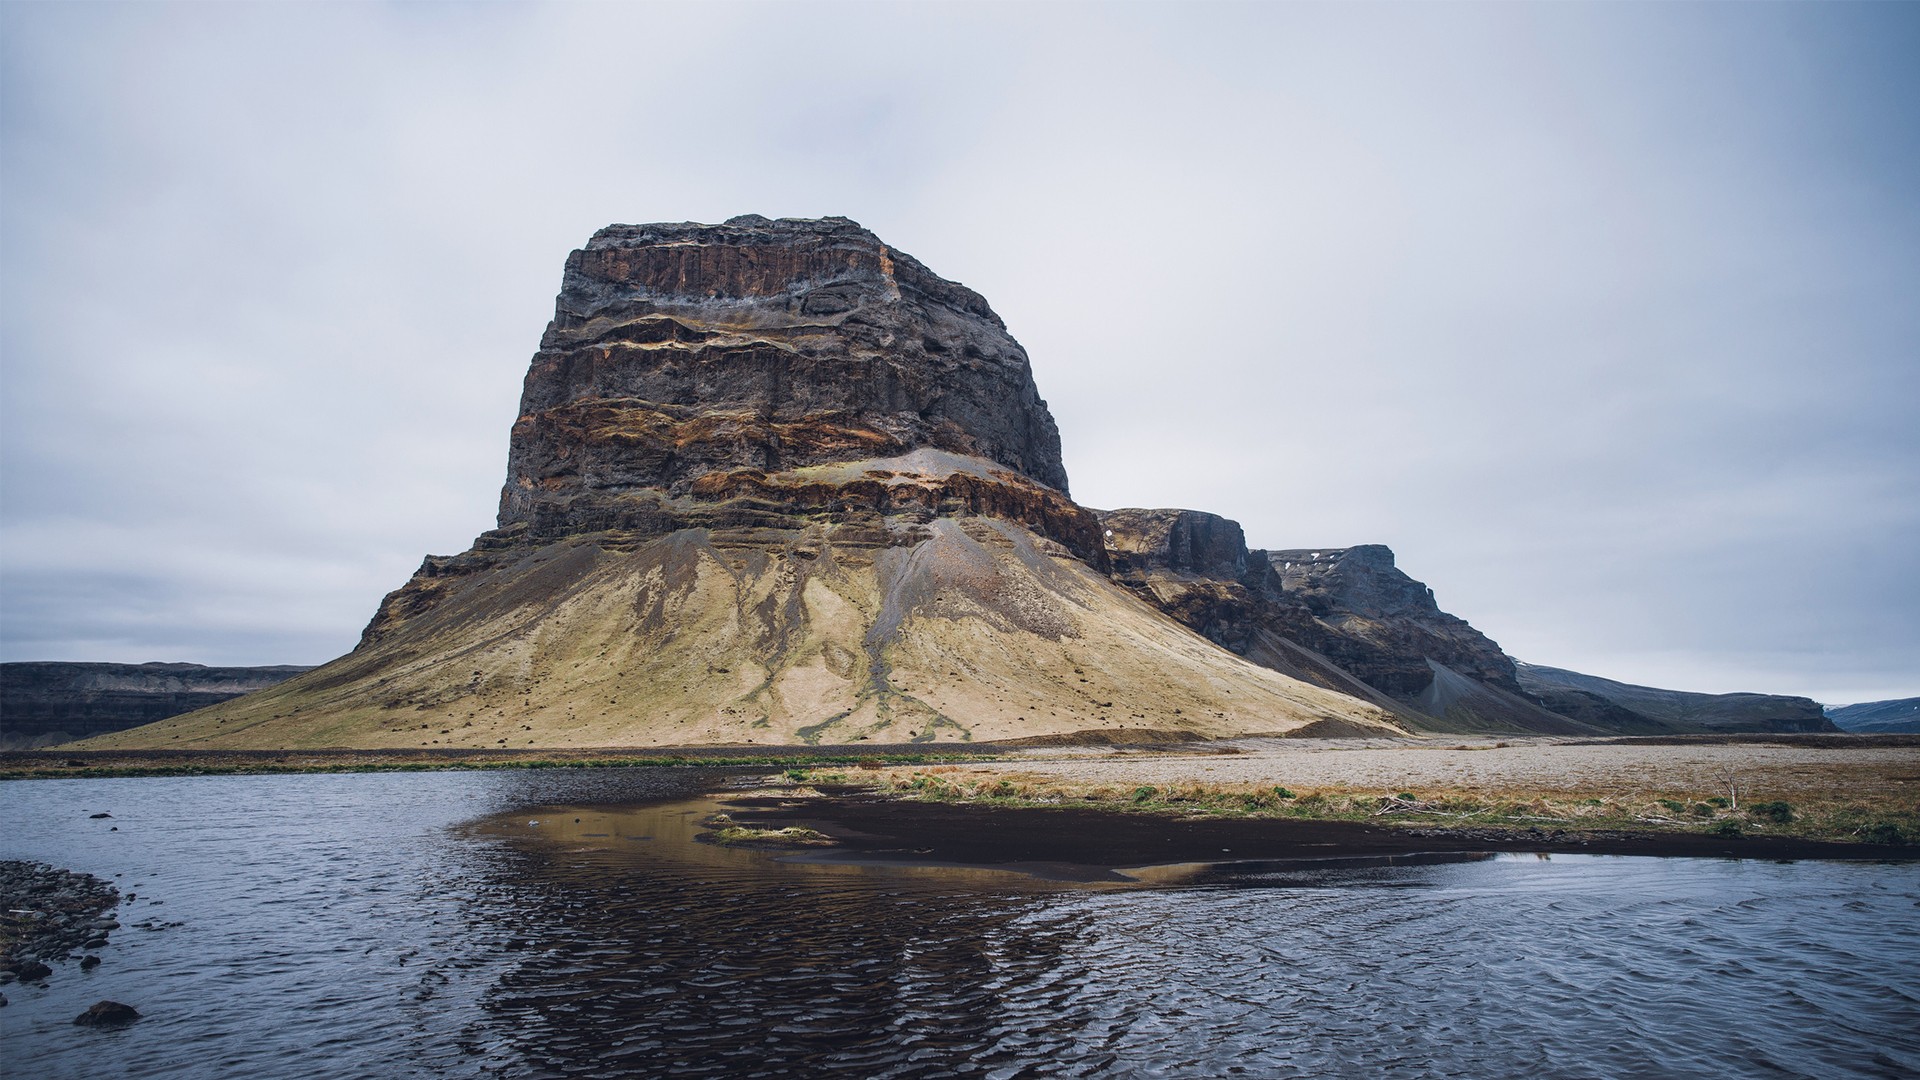 General 1920x1080 landscape rock formation cliff Iceland river rocks nature outdoors nordic landscapes